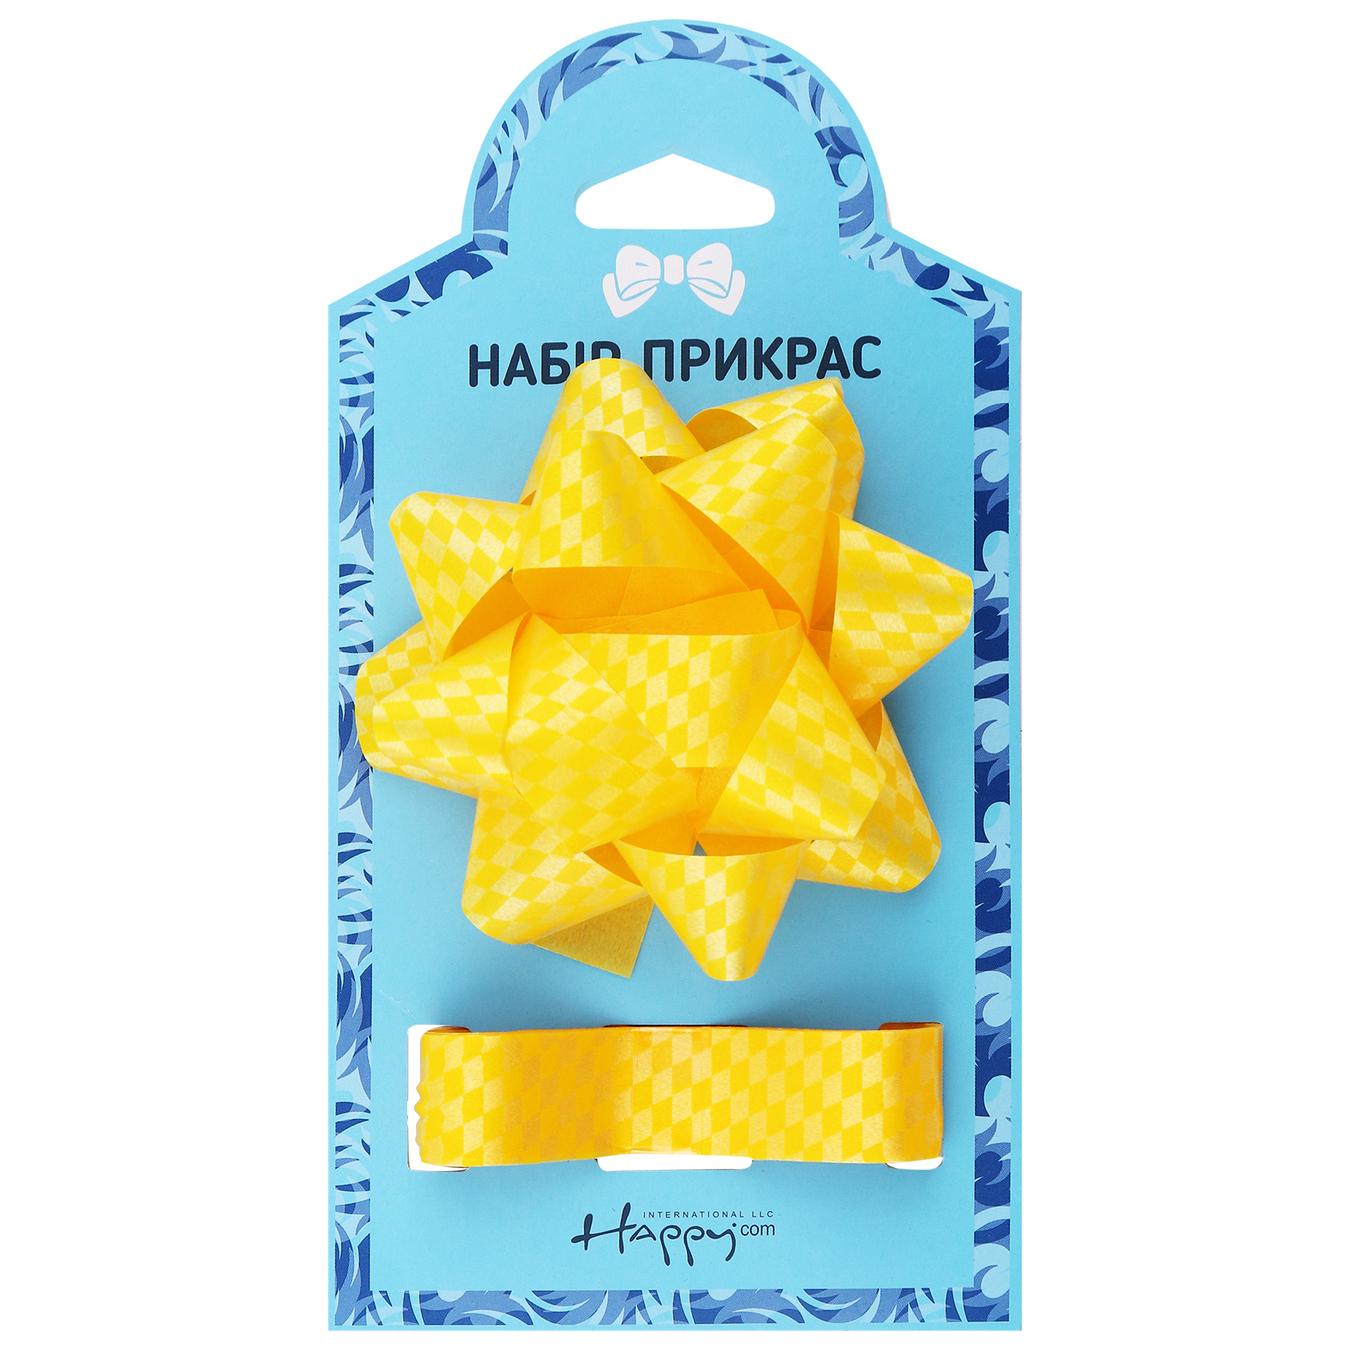 Happycom ornaments for gifts bow star and ribbon 2pcs 3